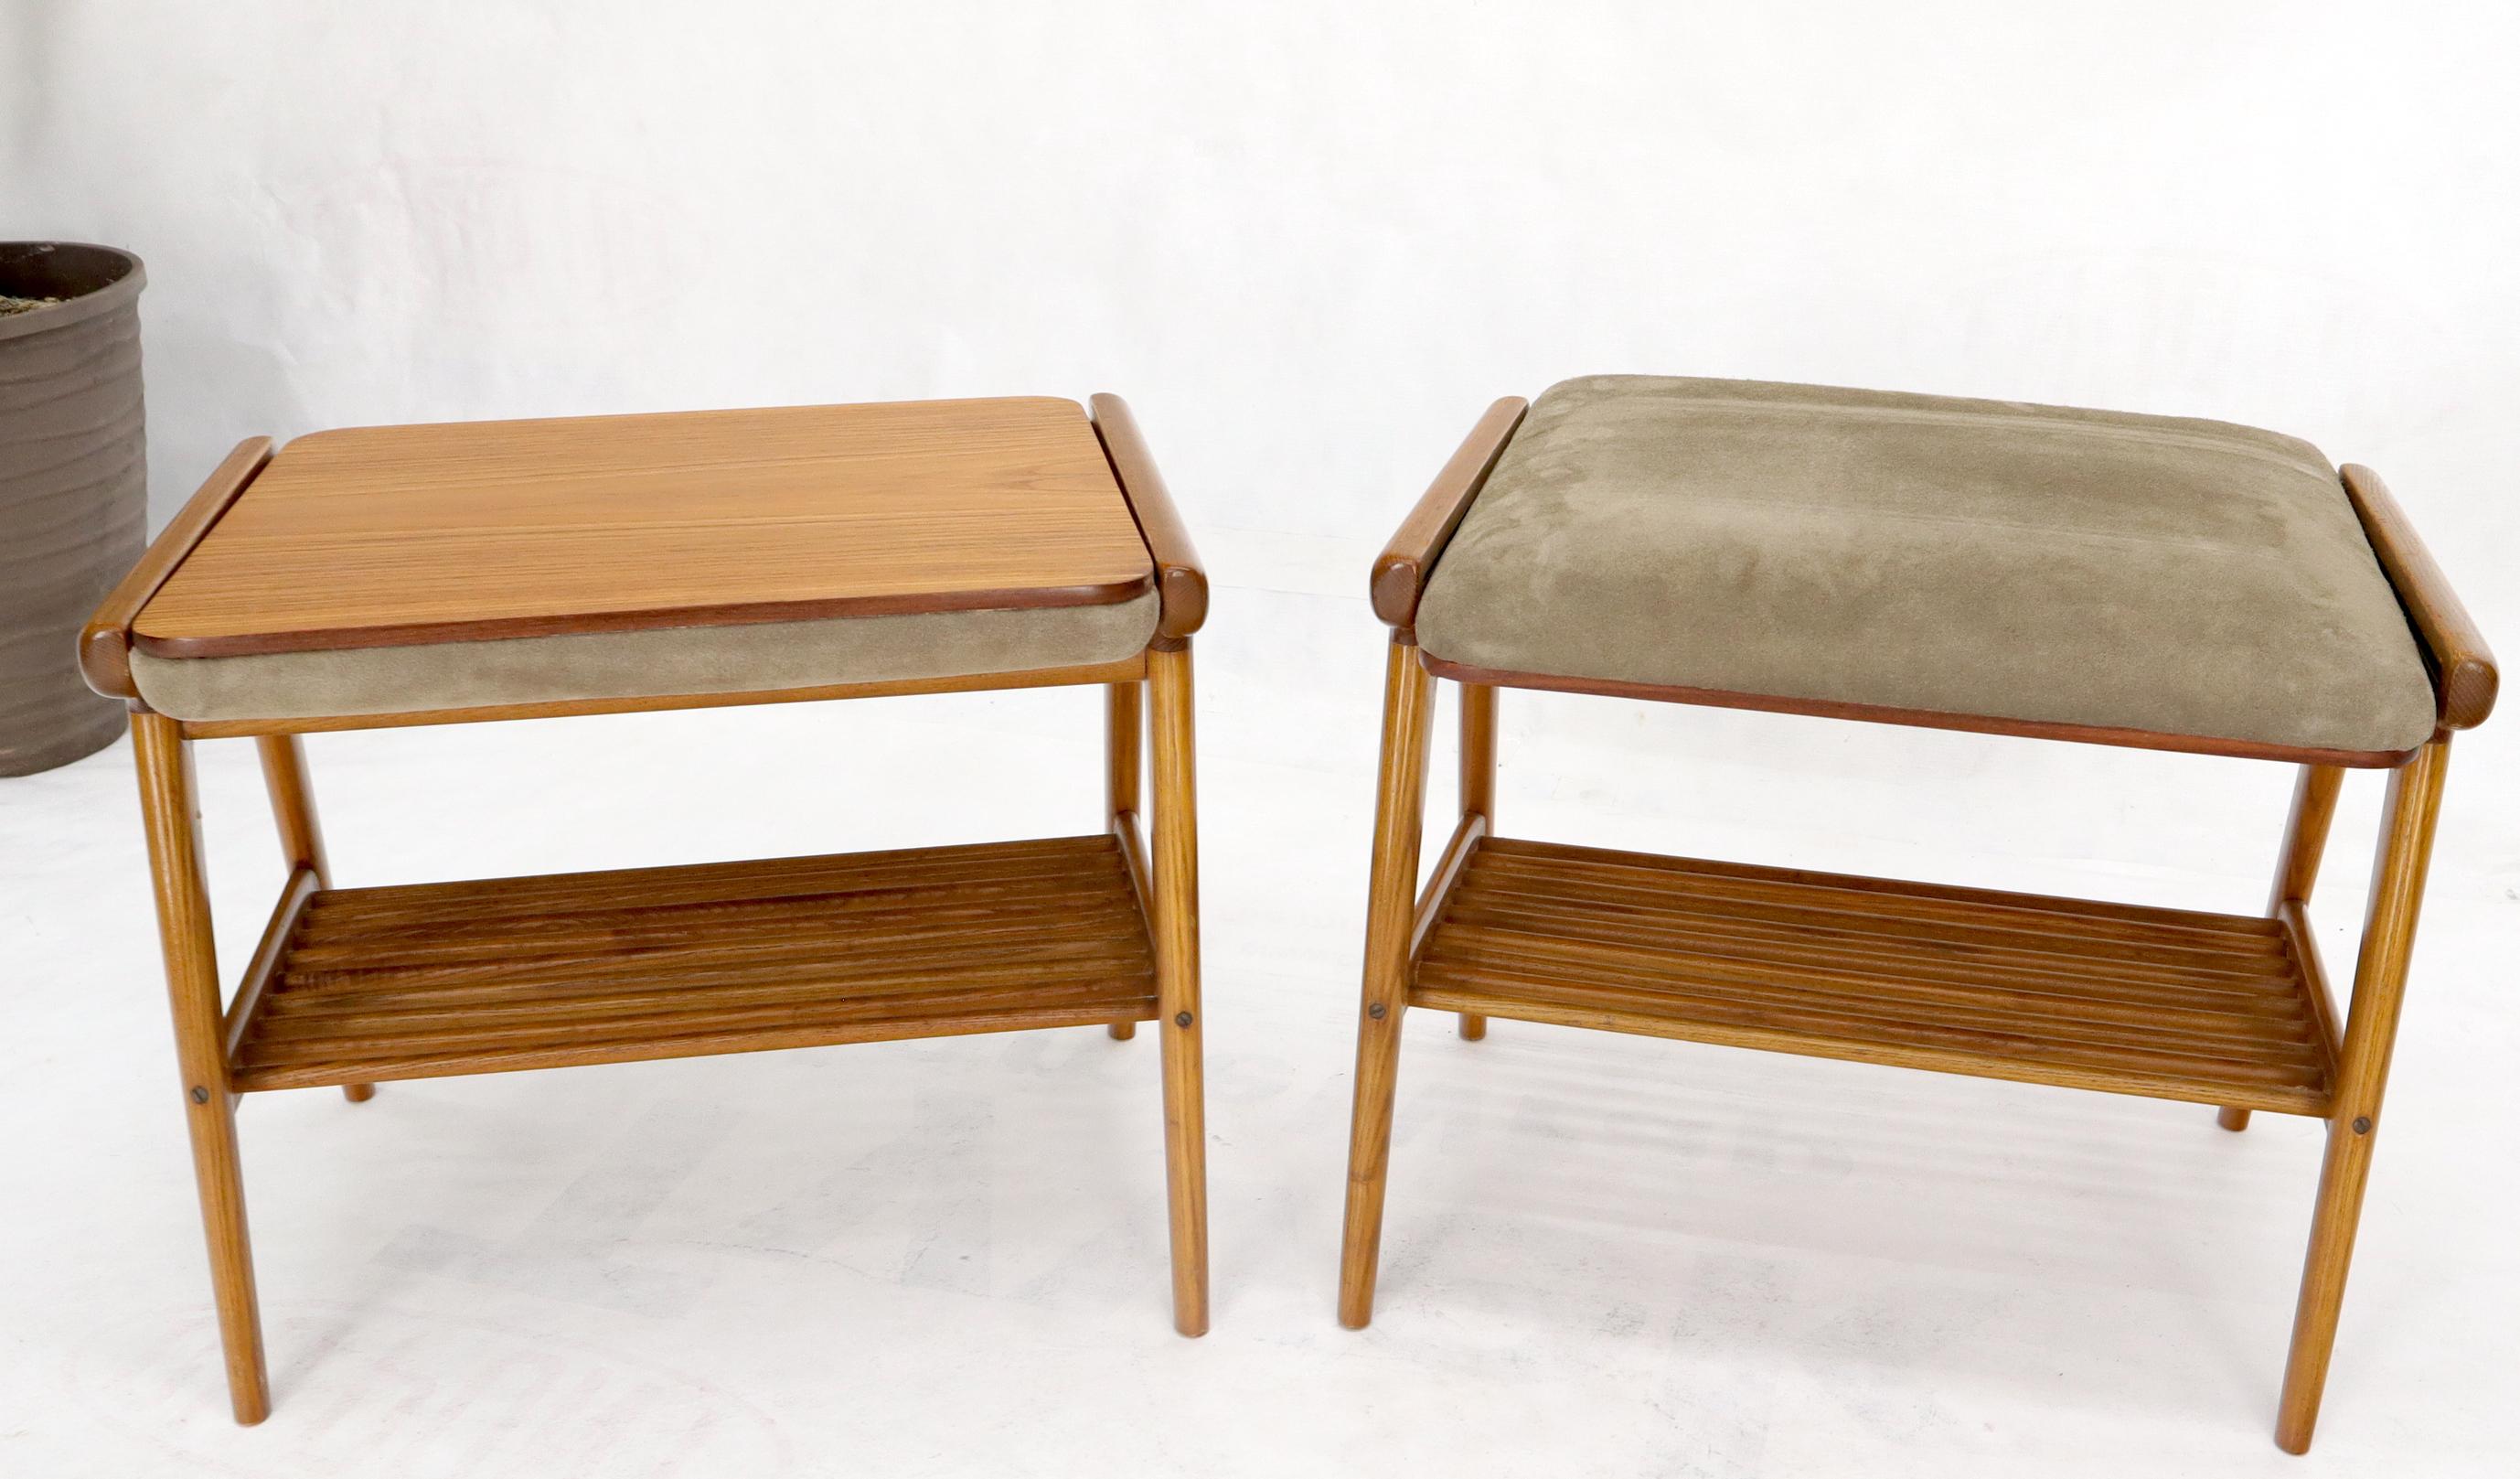 Pair of Danish Teak Mid-Century Modern Flip Top Tables Suede Benches In Good Condition For Sale In Rockaway, NJ